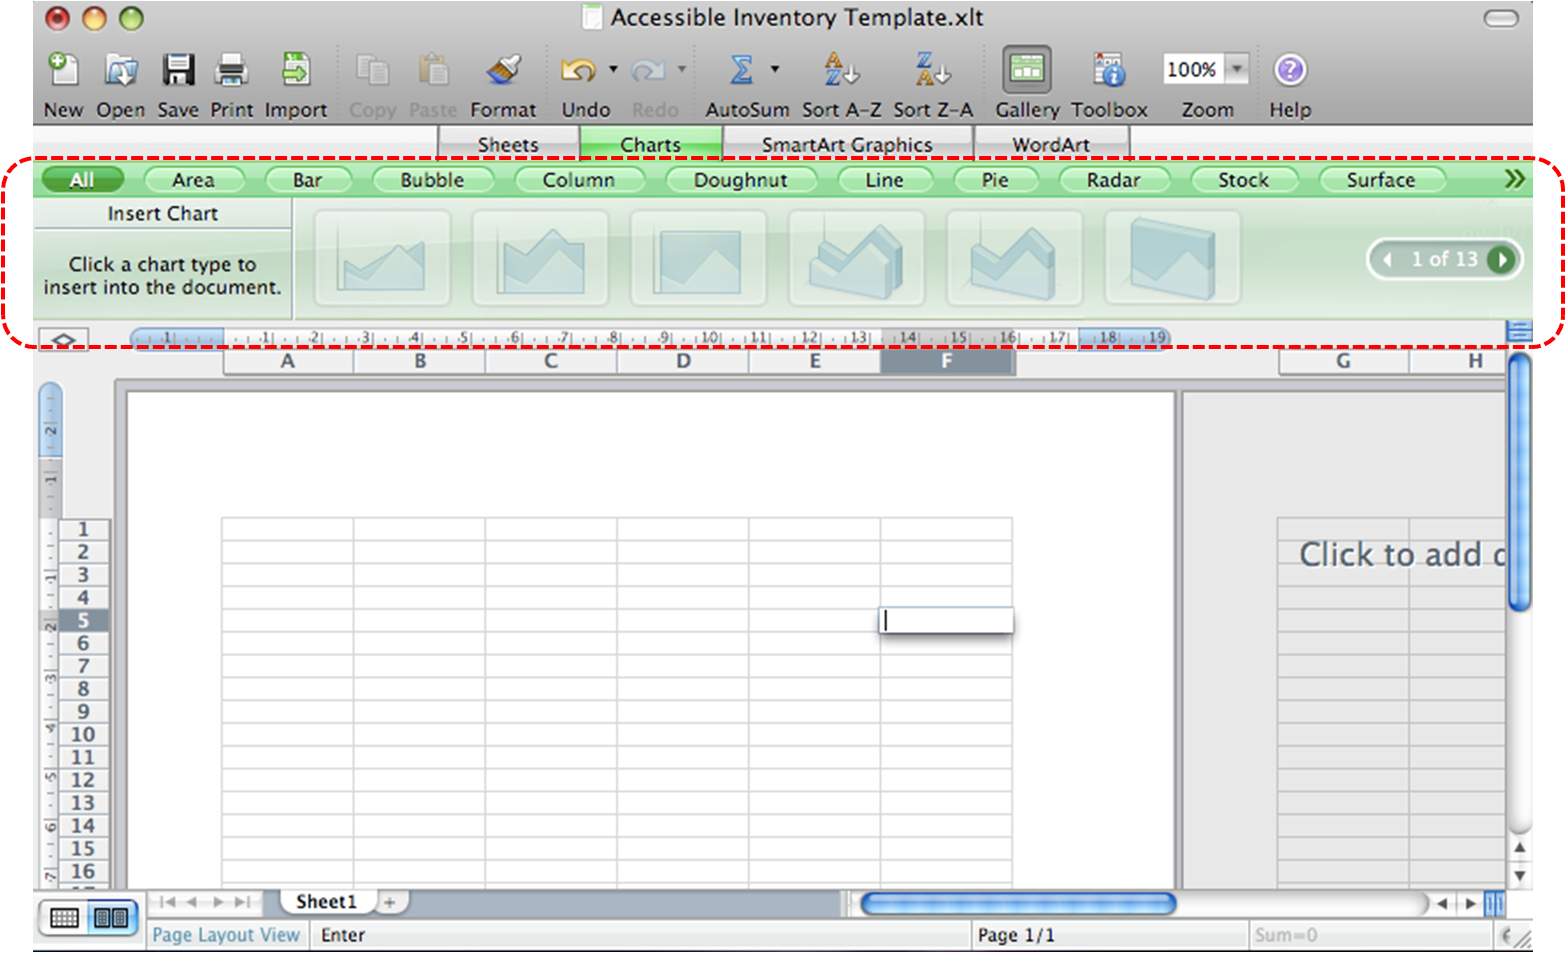 microsoft 2008 excel for mac formatting pallete as a toolbar